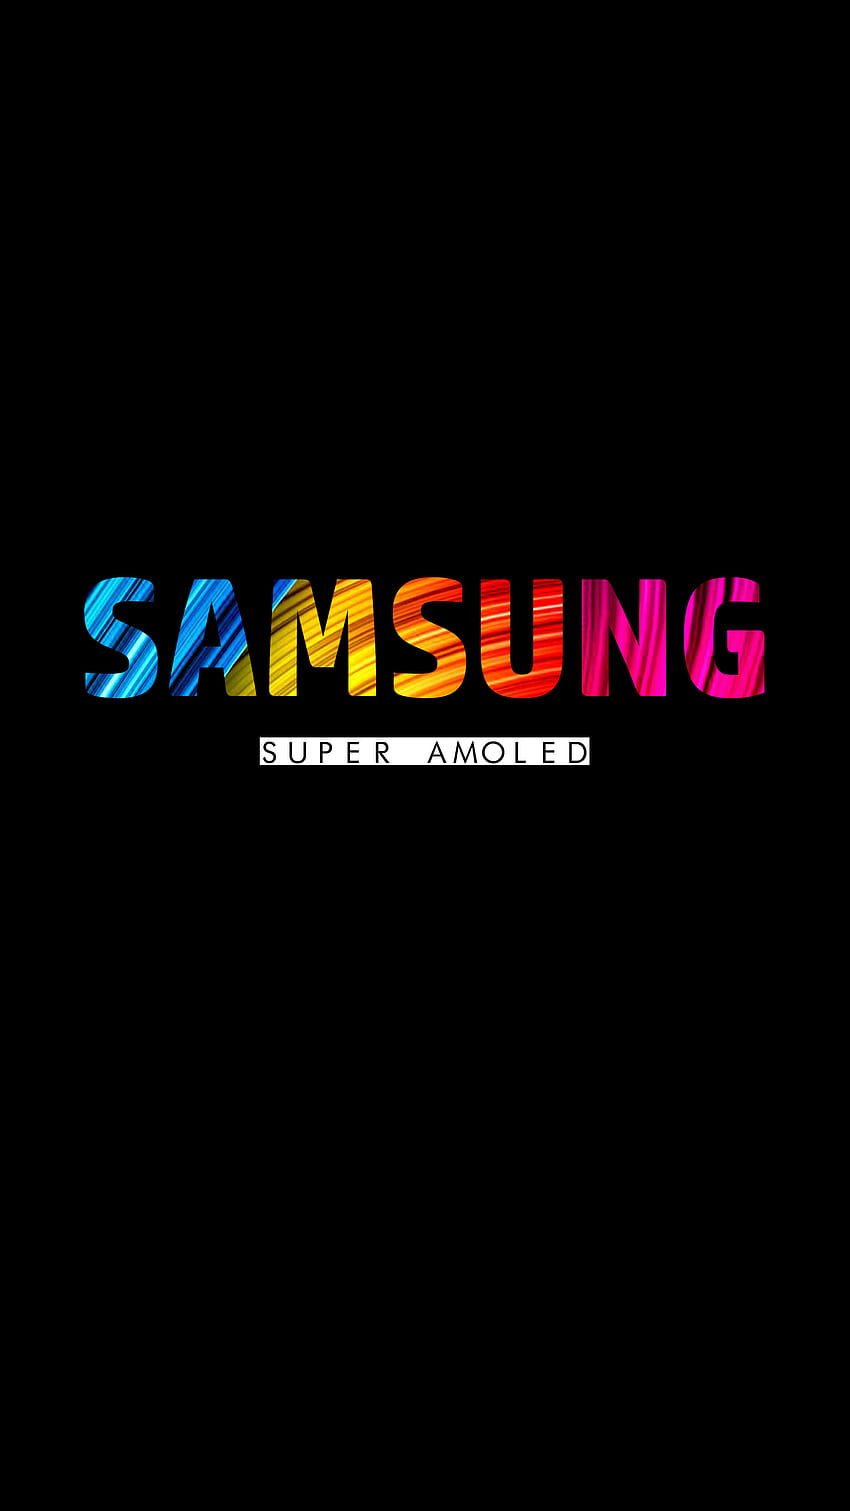 penggemar neil di iPhone pada tahun 2019. Ponsel Galaxy, Samsung Super AMOLED wallpaper ponsel HD